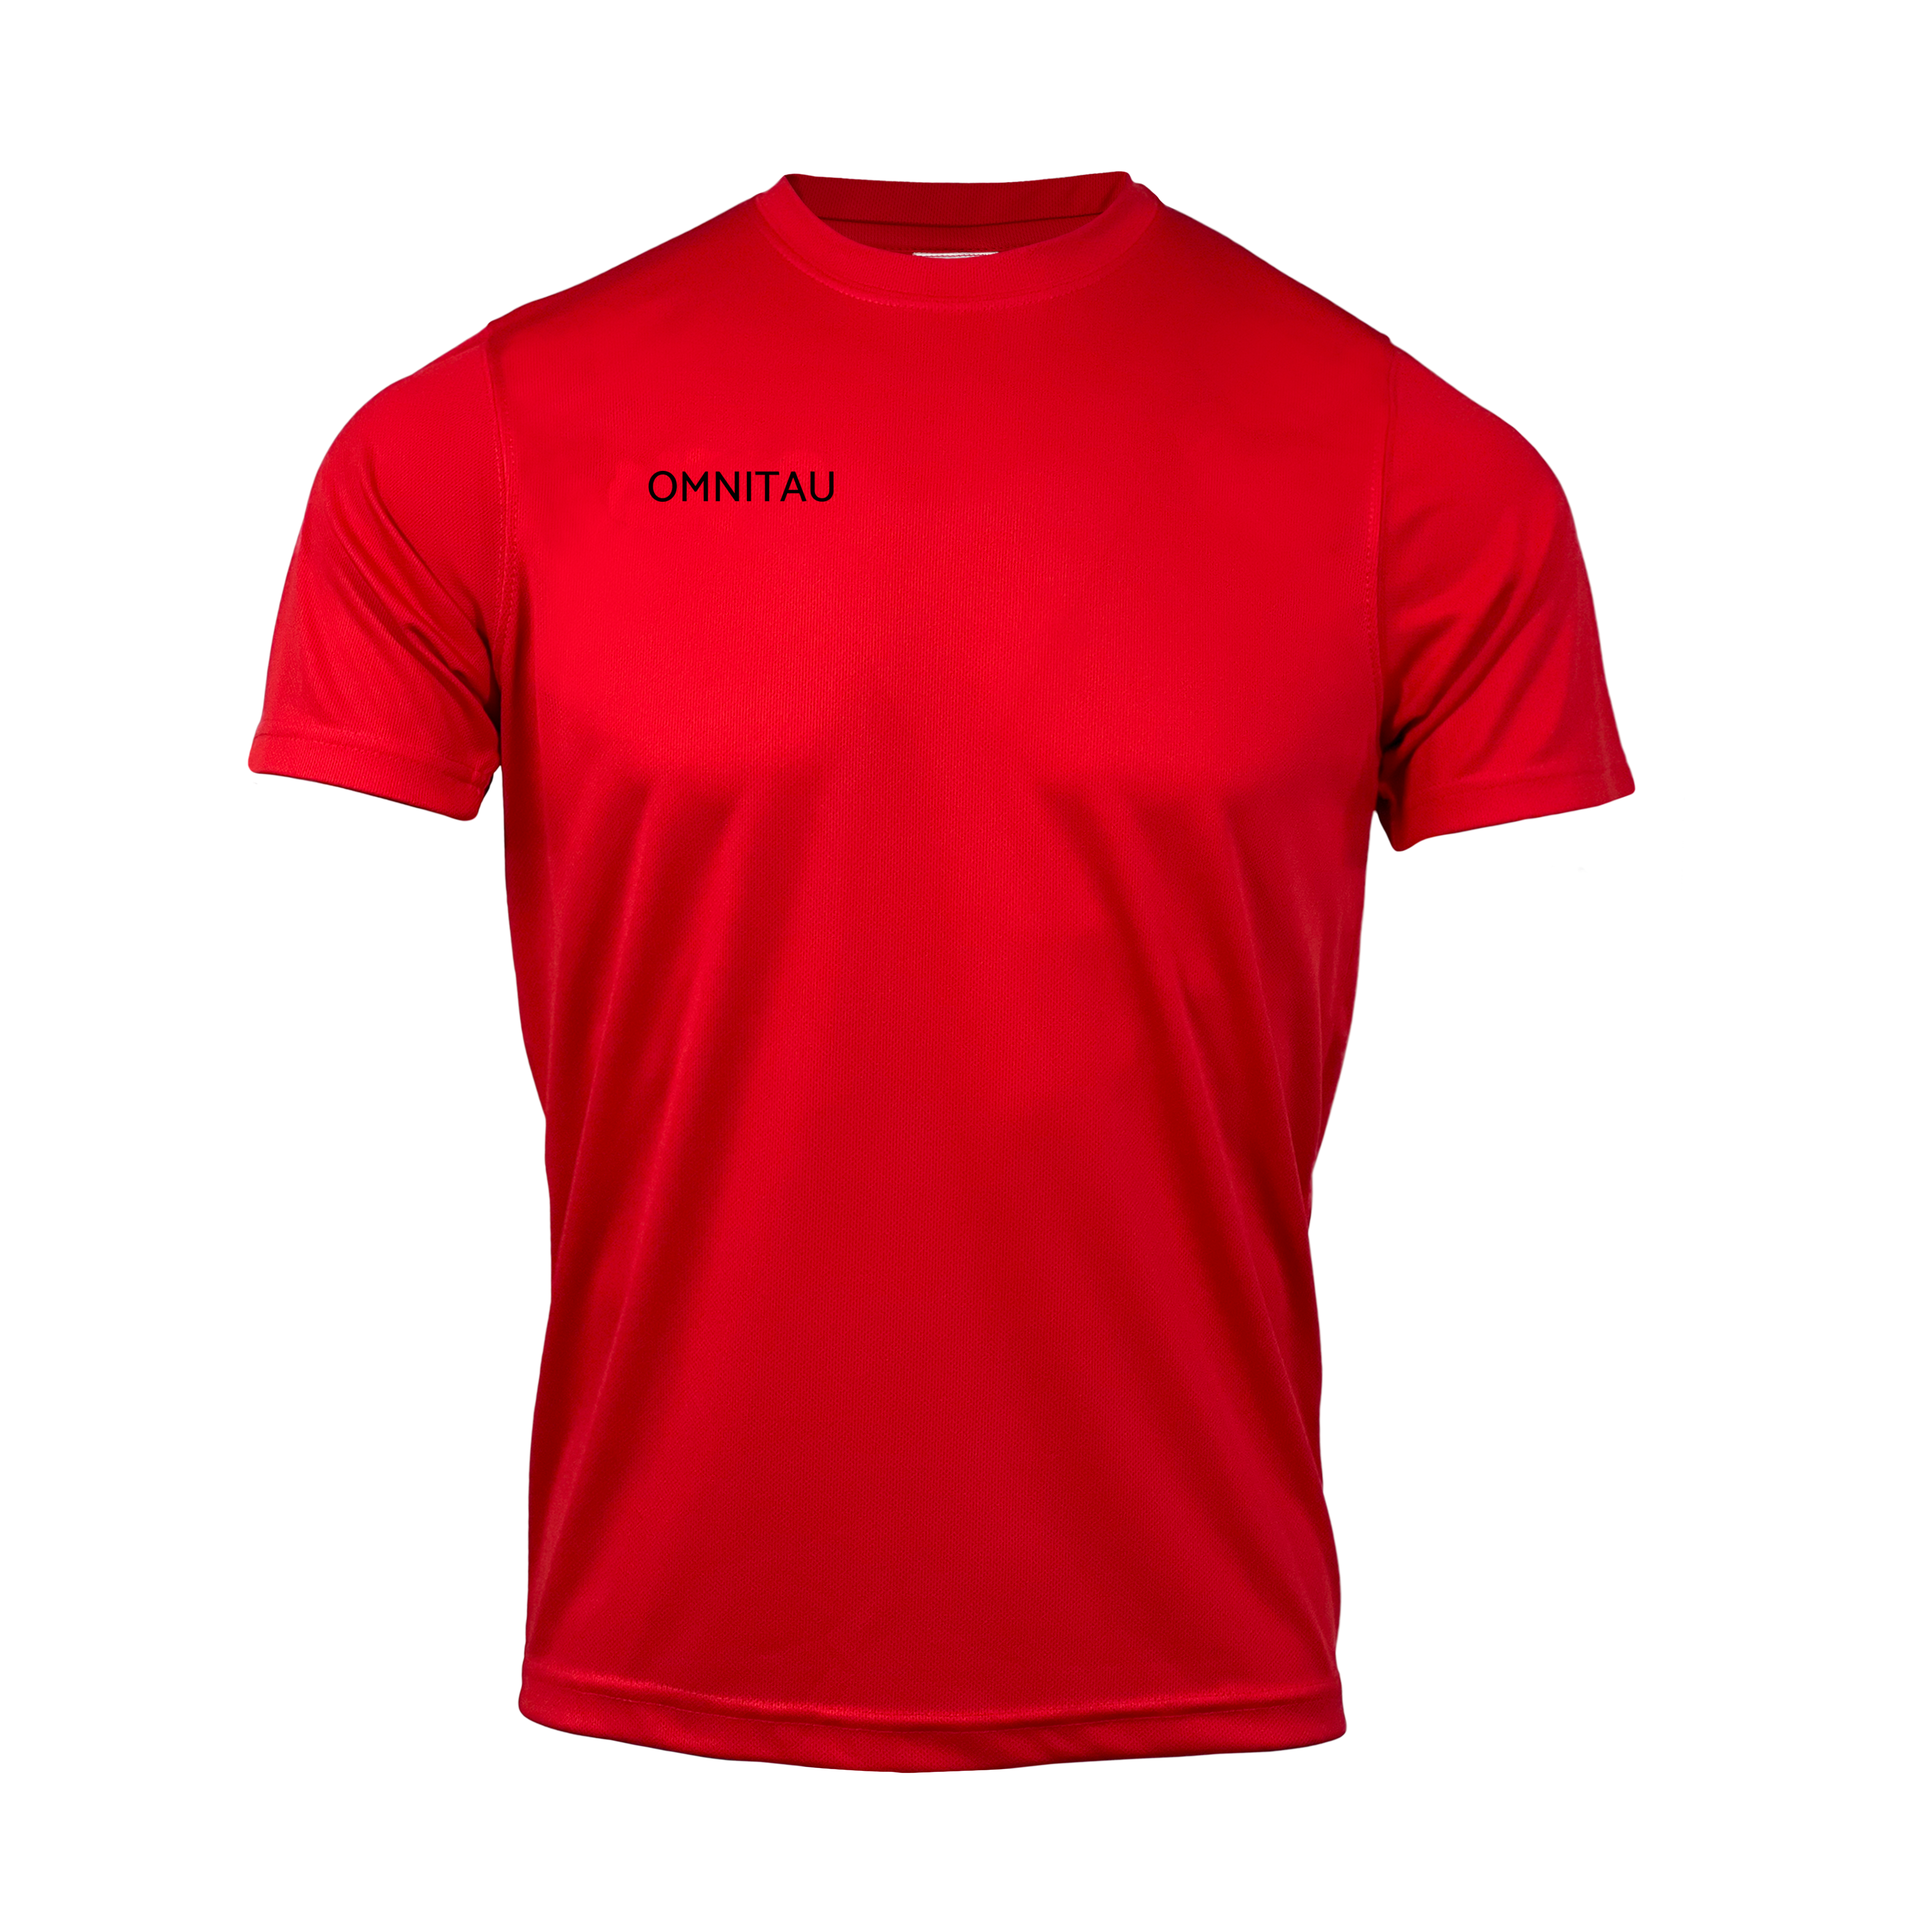 Omnitau Kid's Team Sports Breathable Technical T-Shirt - Red